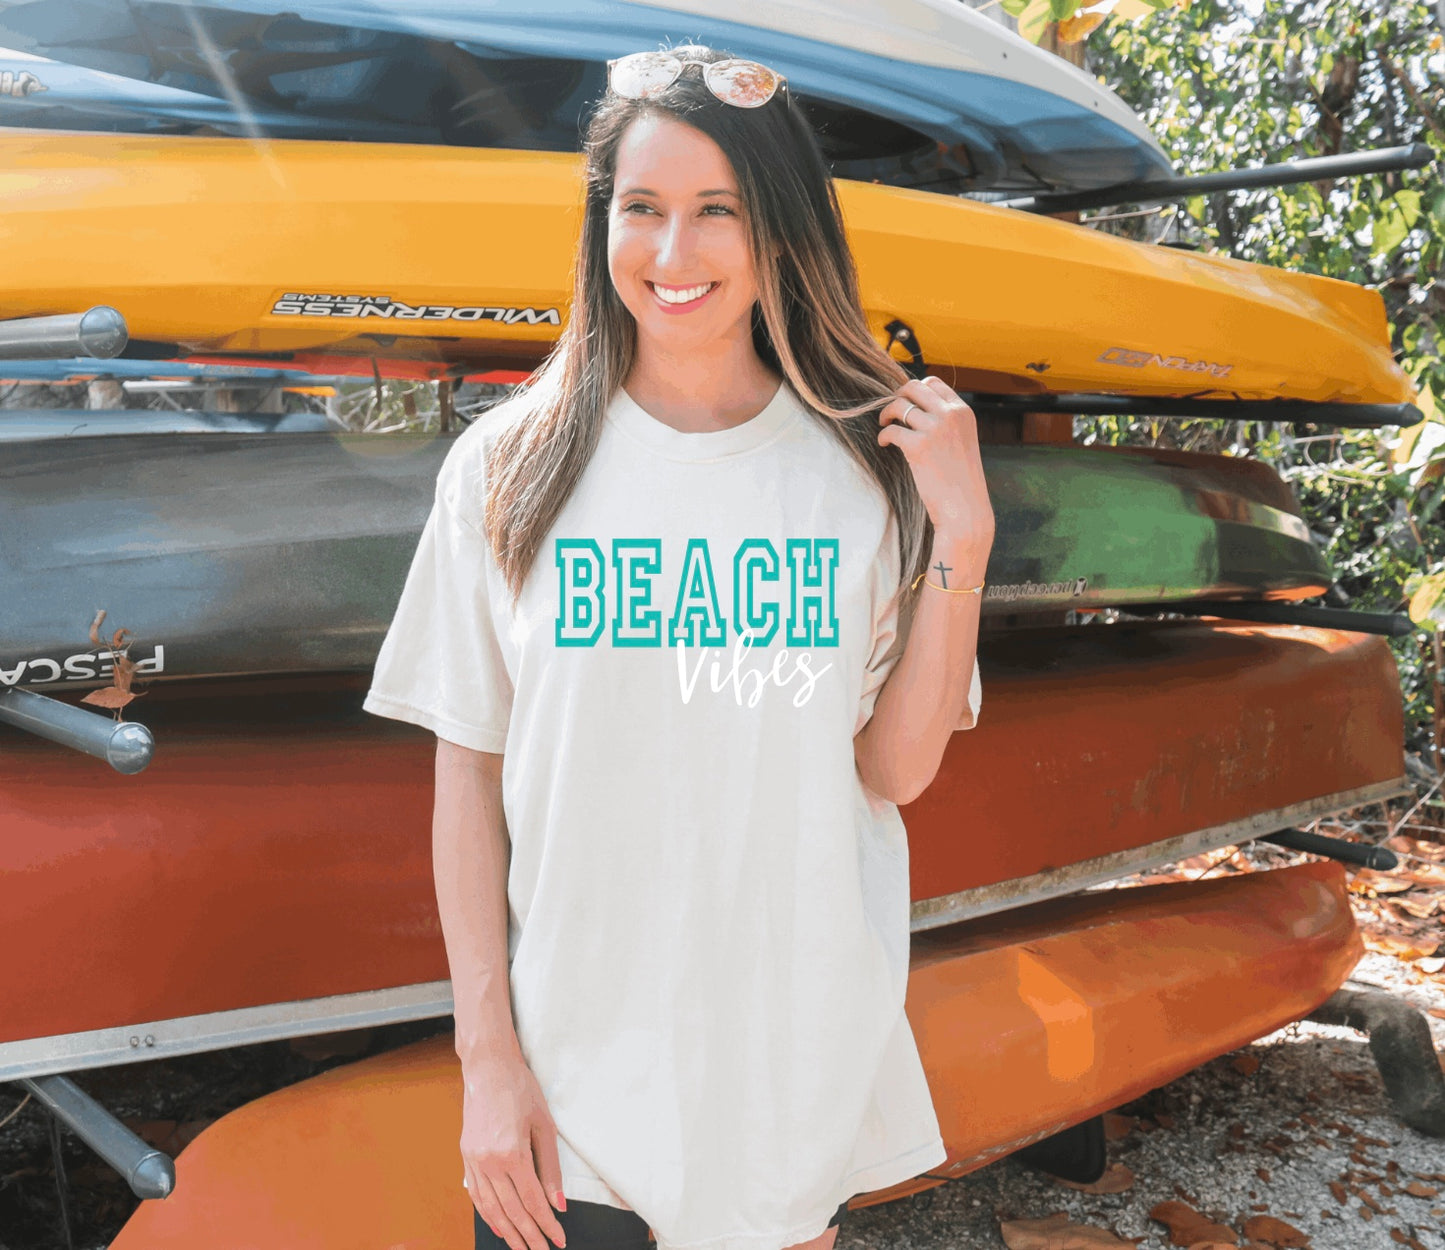 Beach vibes t-shirt 